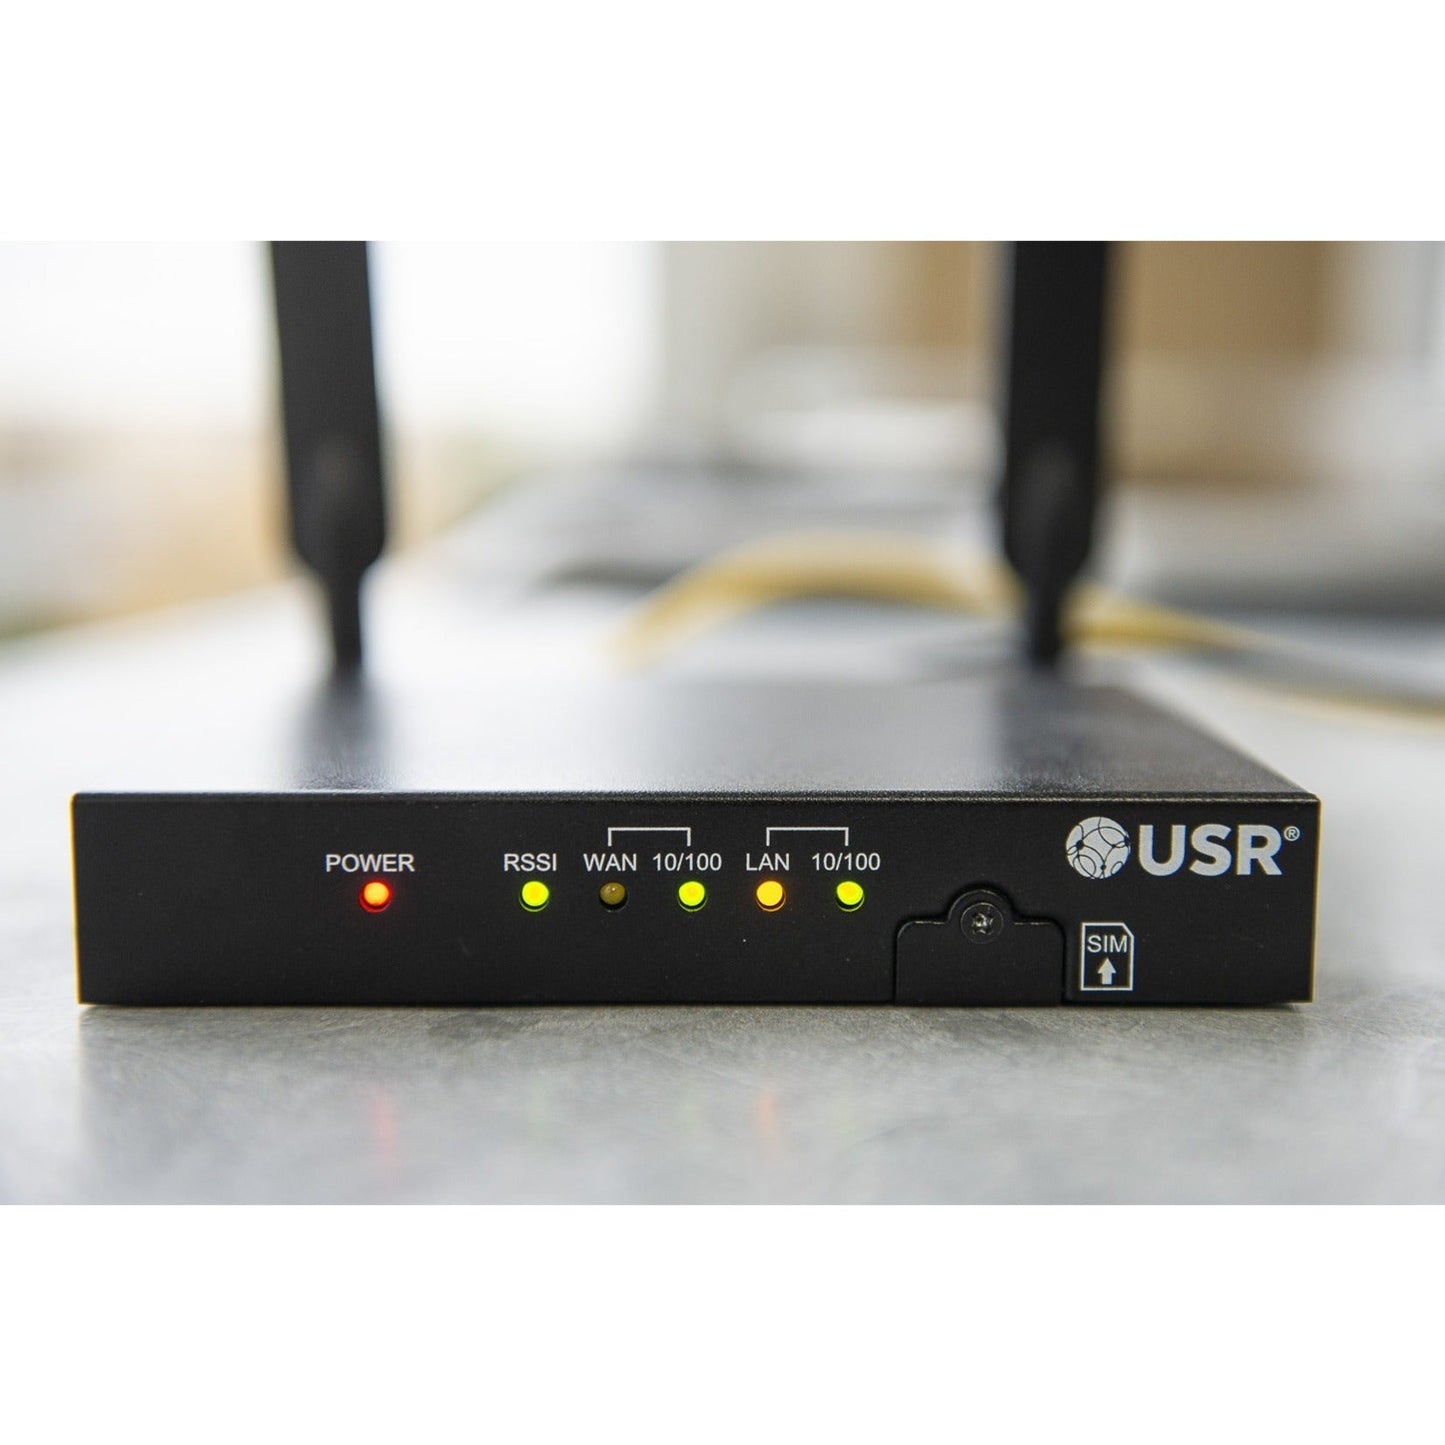 USRobotics Courier USR3513 1 SIM Cellular Ethernet Modem/Wireless Router